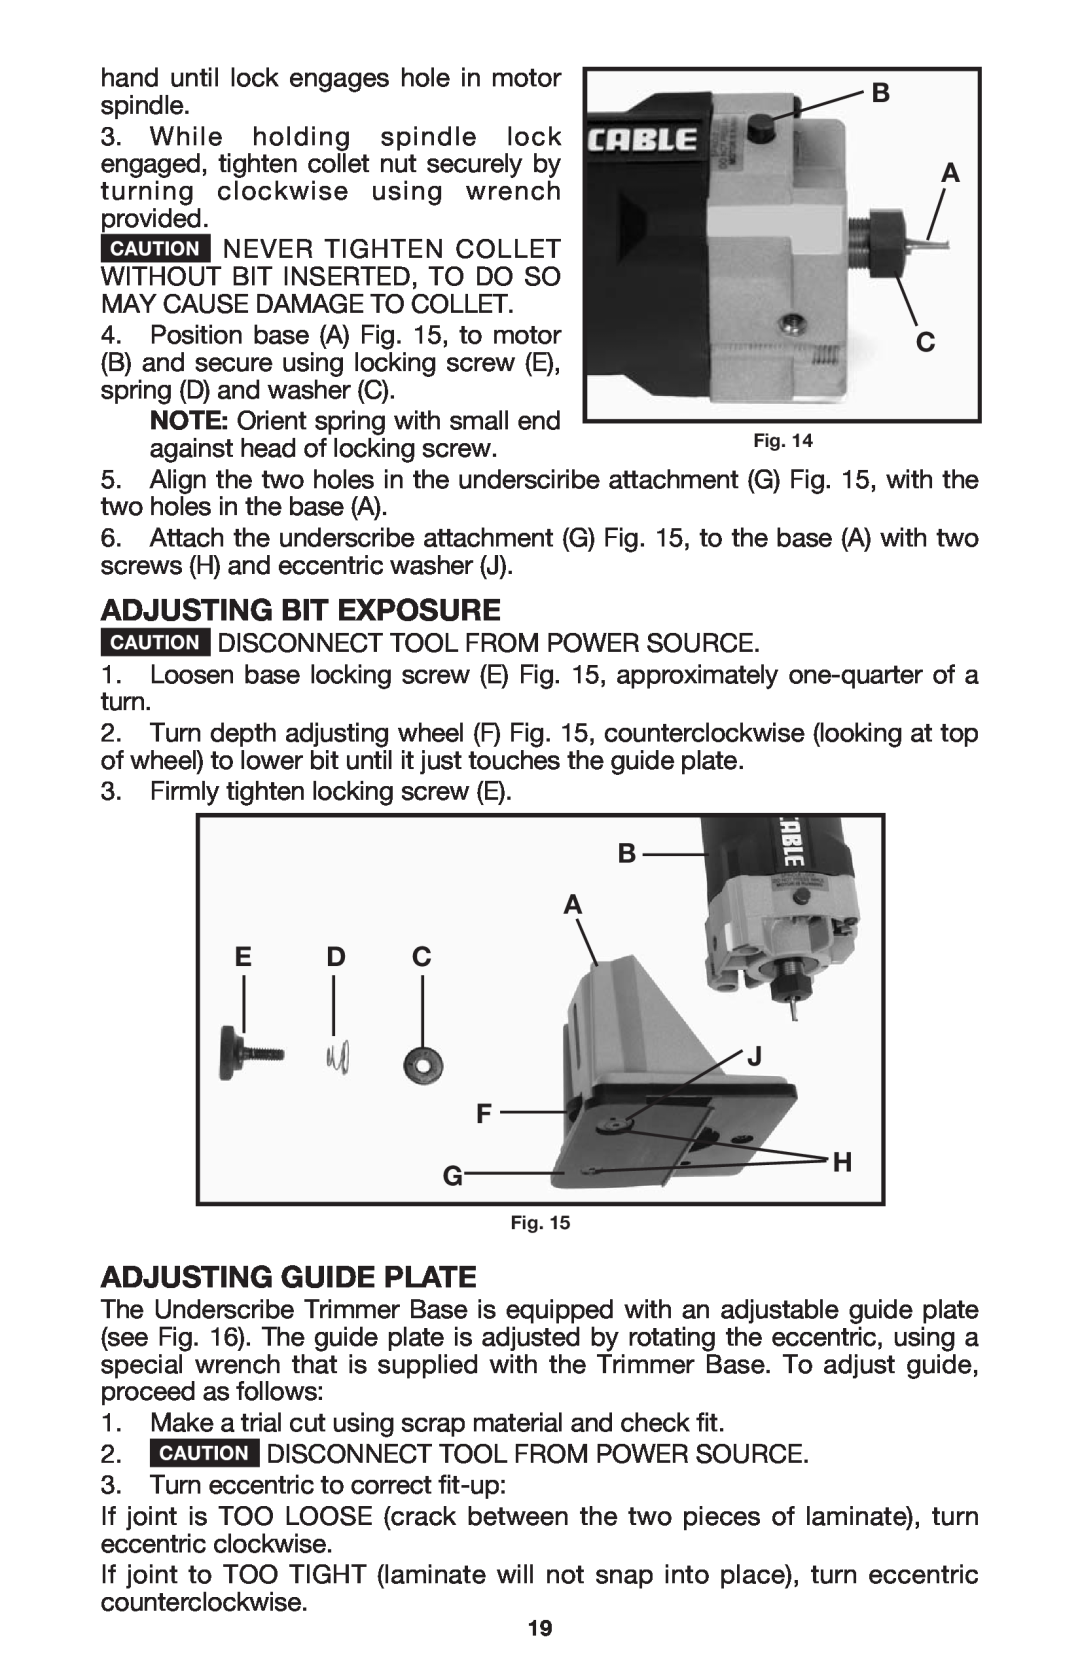 Porter-Cable 7310 instruction manual Adjusting Bit Exposure, Adjusting Guide Plate, B A C, B A E D C J F G H 